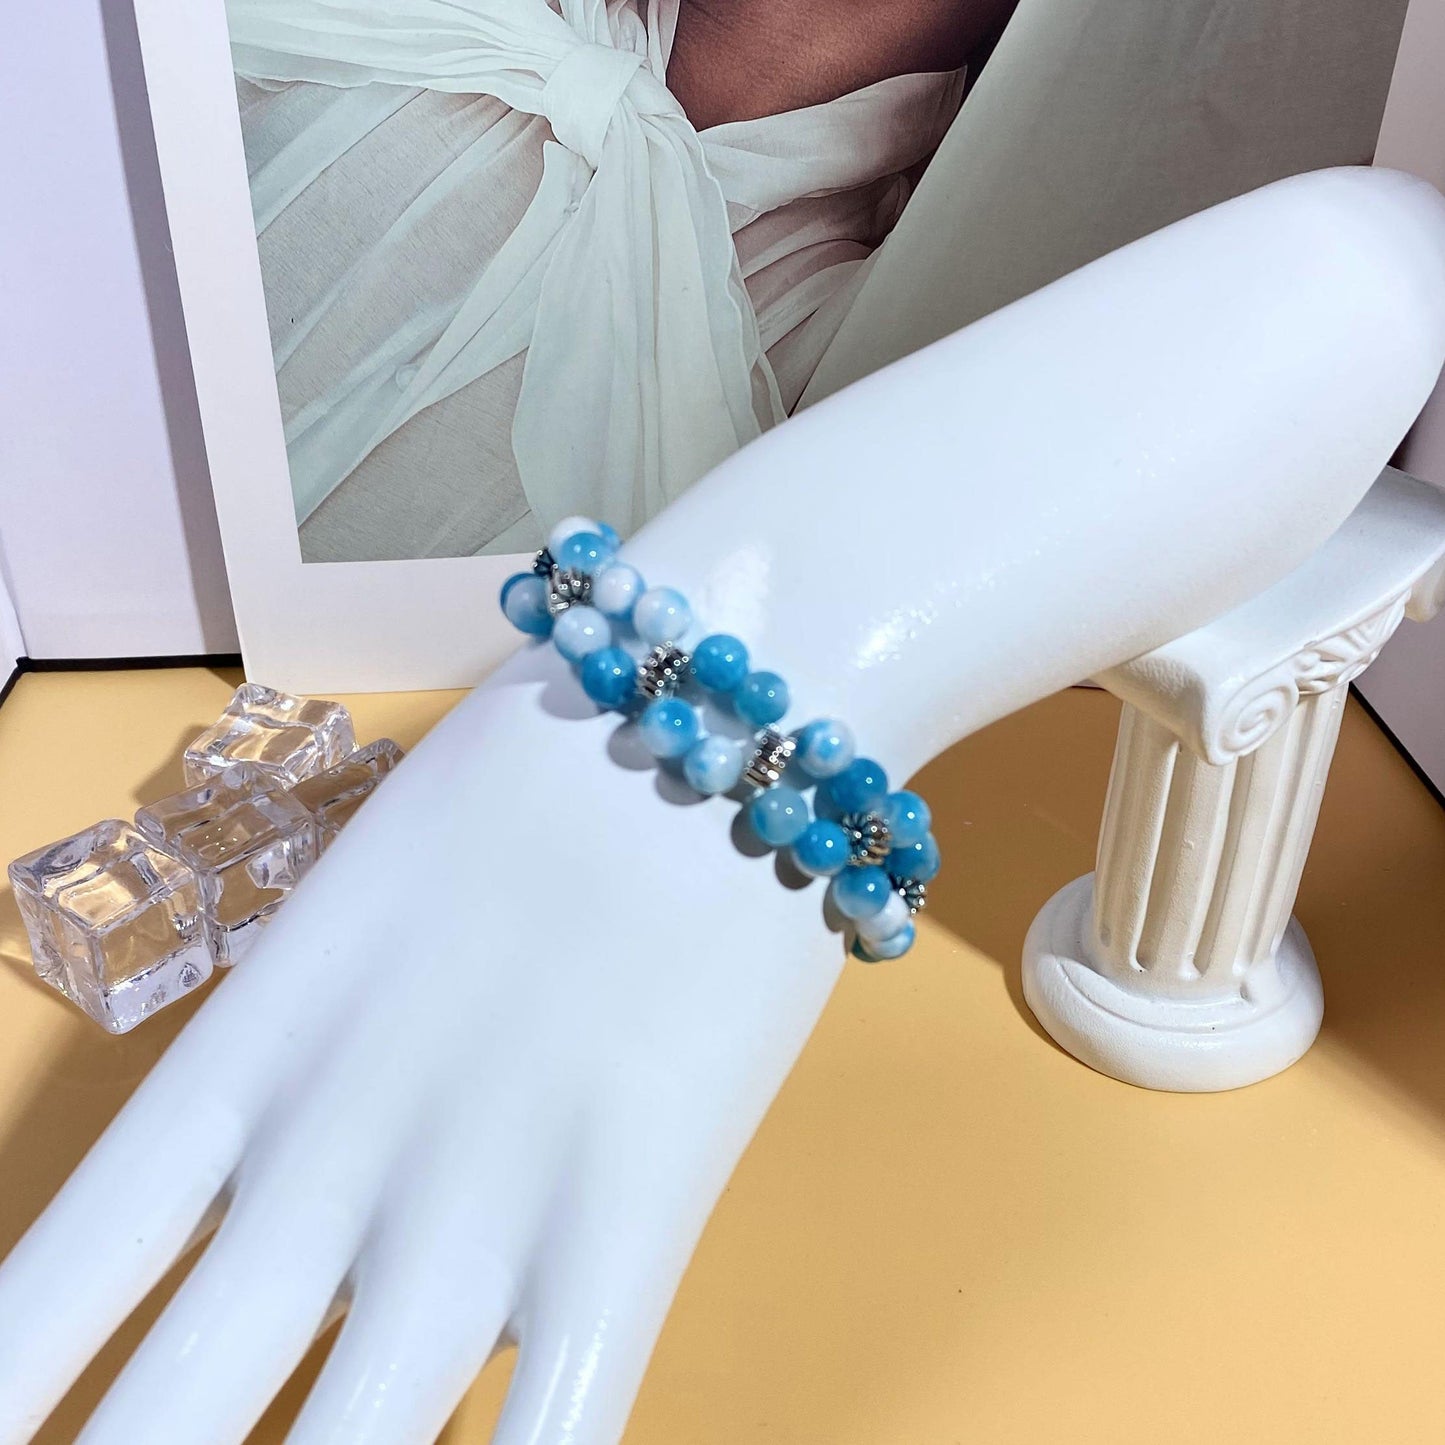 2-Layered Bracelet Making Kit Flower Bracelet DIY Craft Kit(Blue&White Honey Calcite) with Tutorial Link